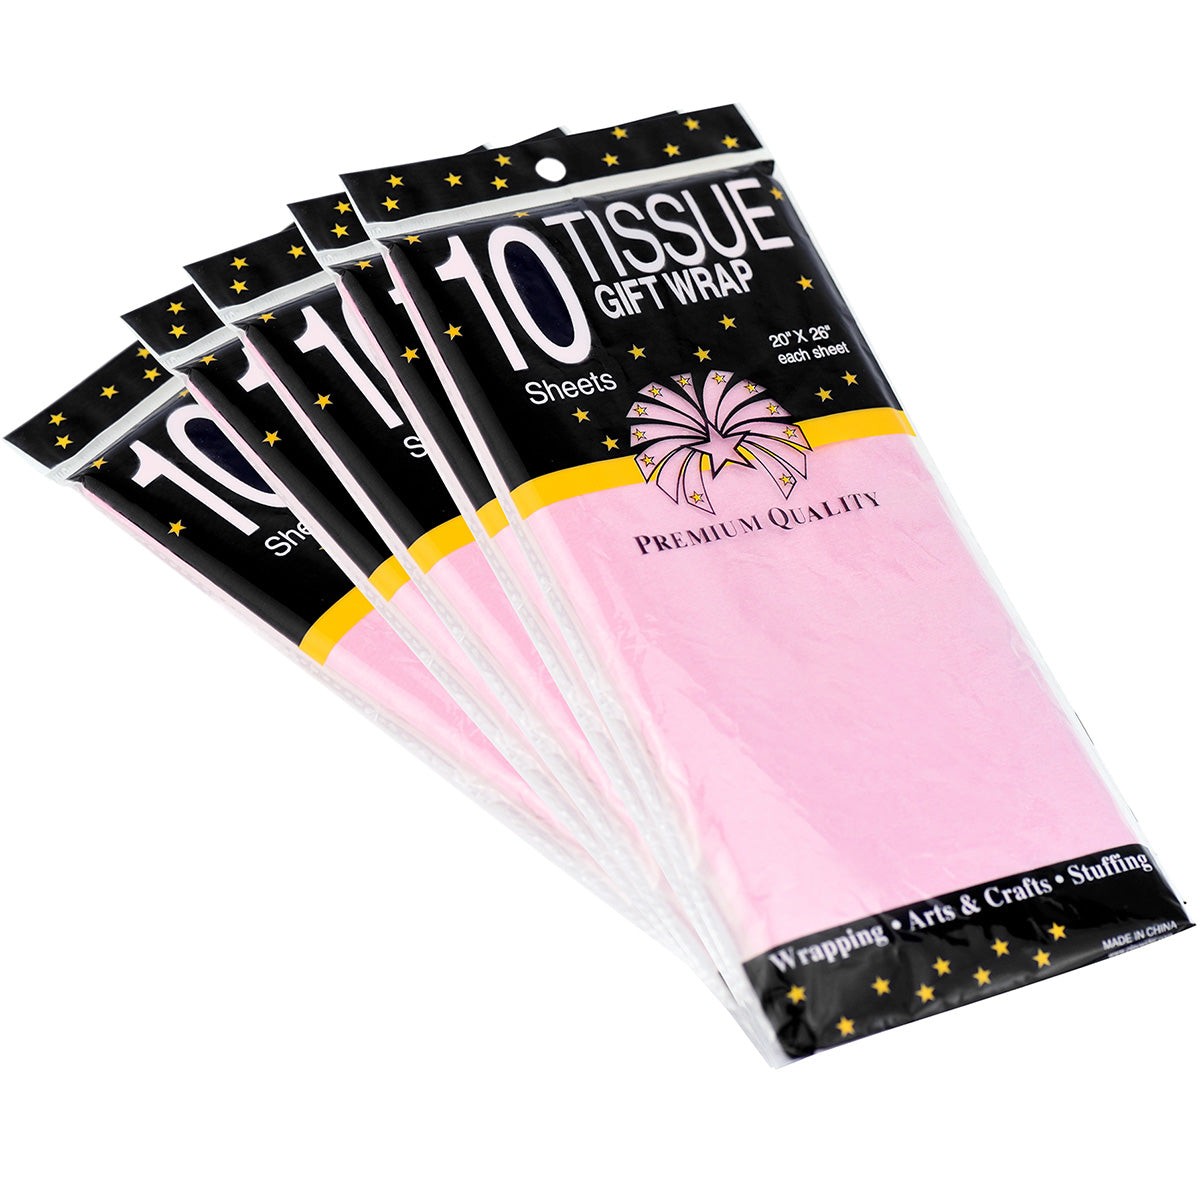 Gift Wrap Tissue Paper Light Pink 20x26 for Gift Bag Wedding